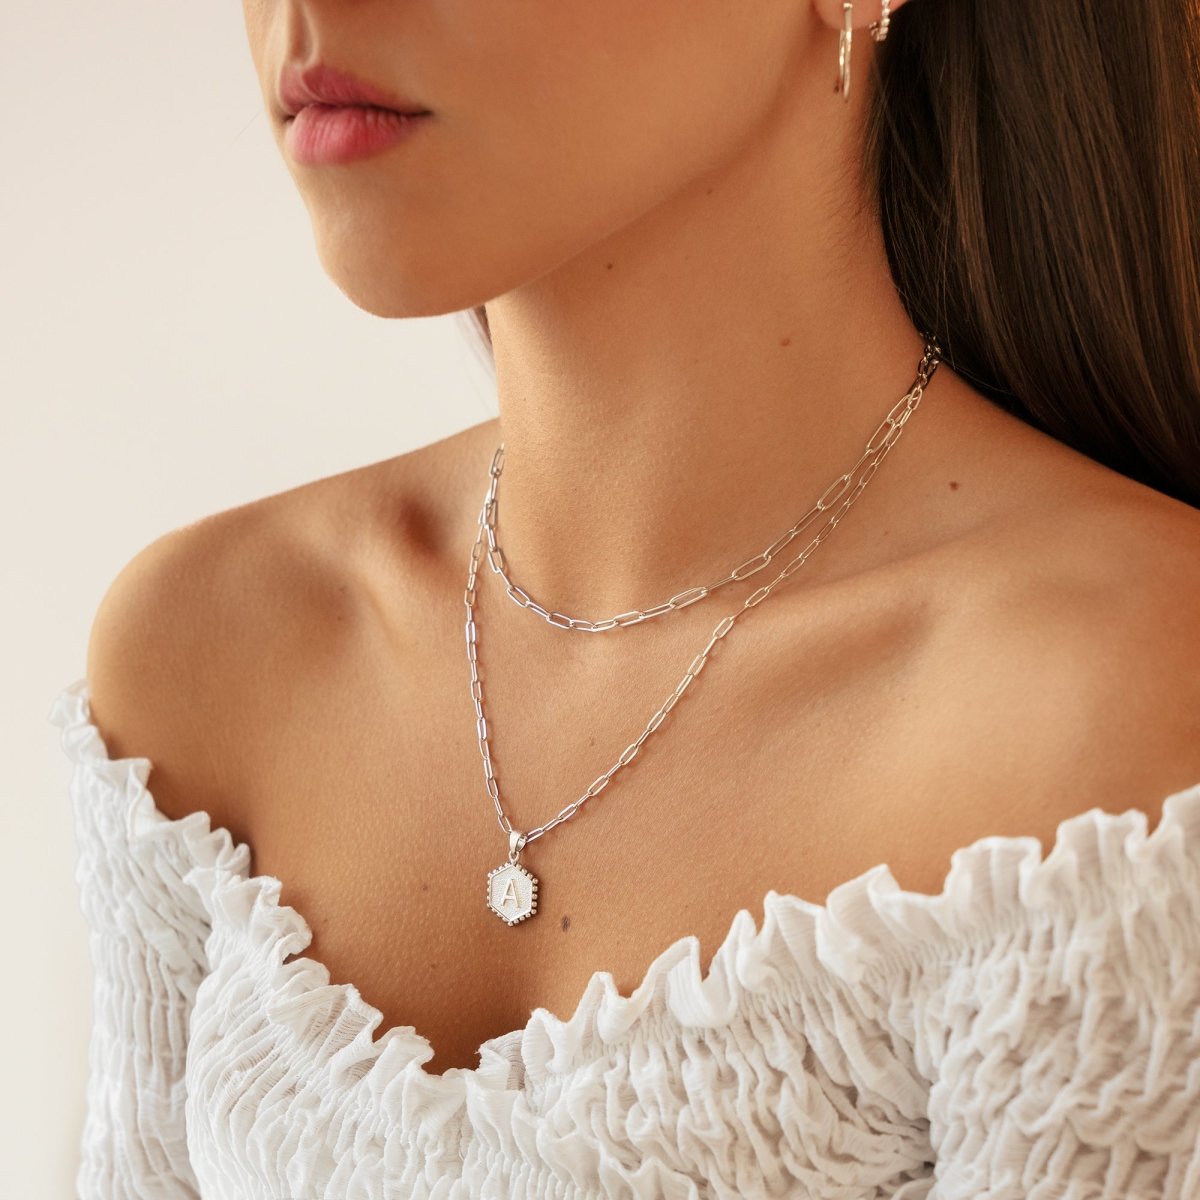 Le Petit Jewelry Box ~ Rose/White - Milas Jewels Shop